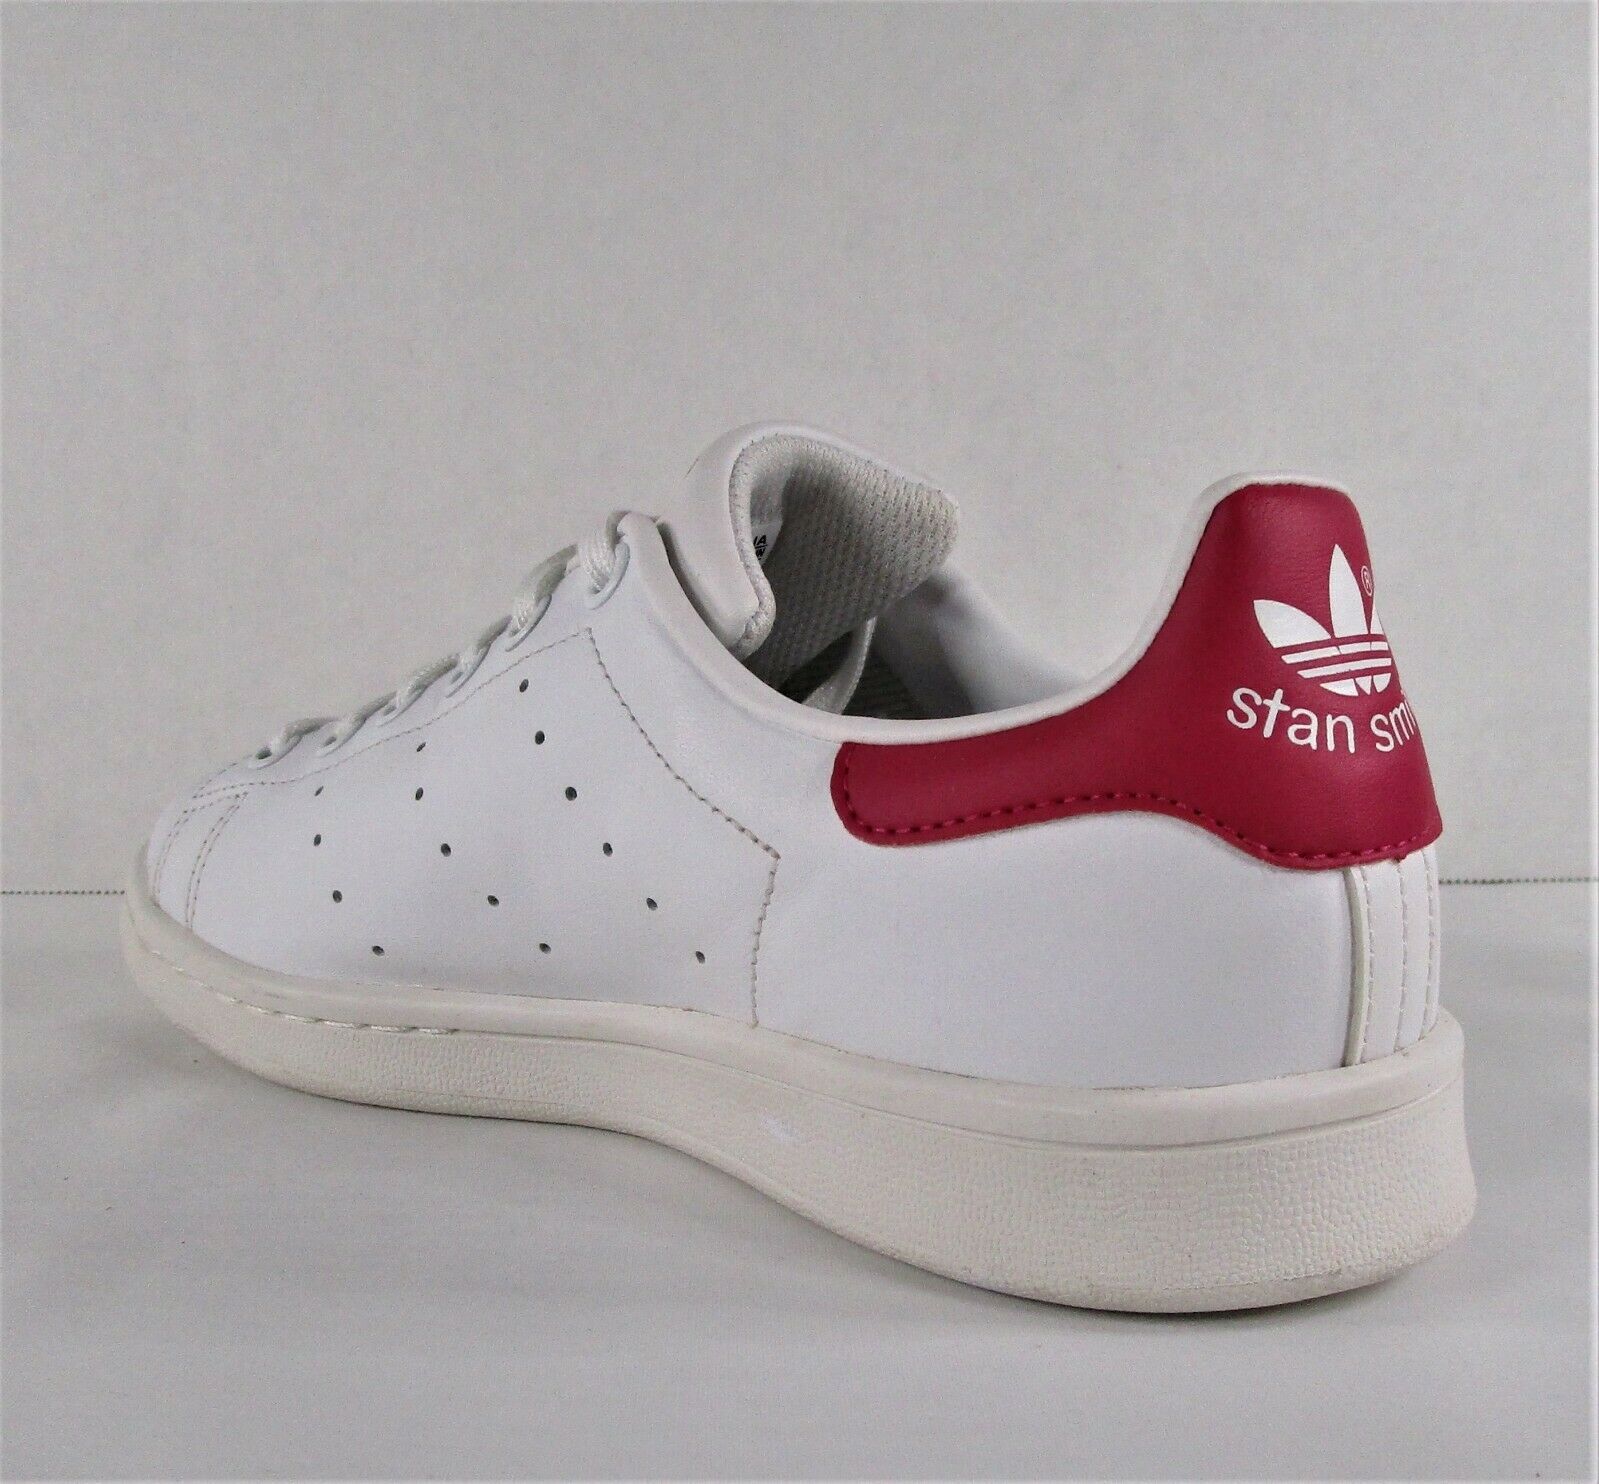 stan smith shoe